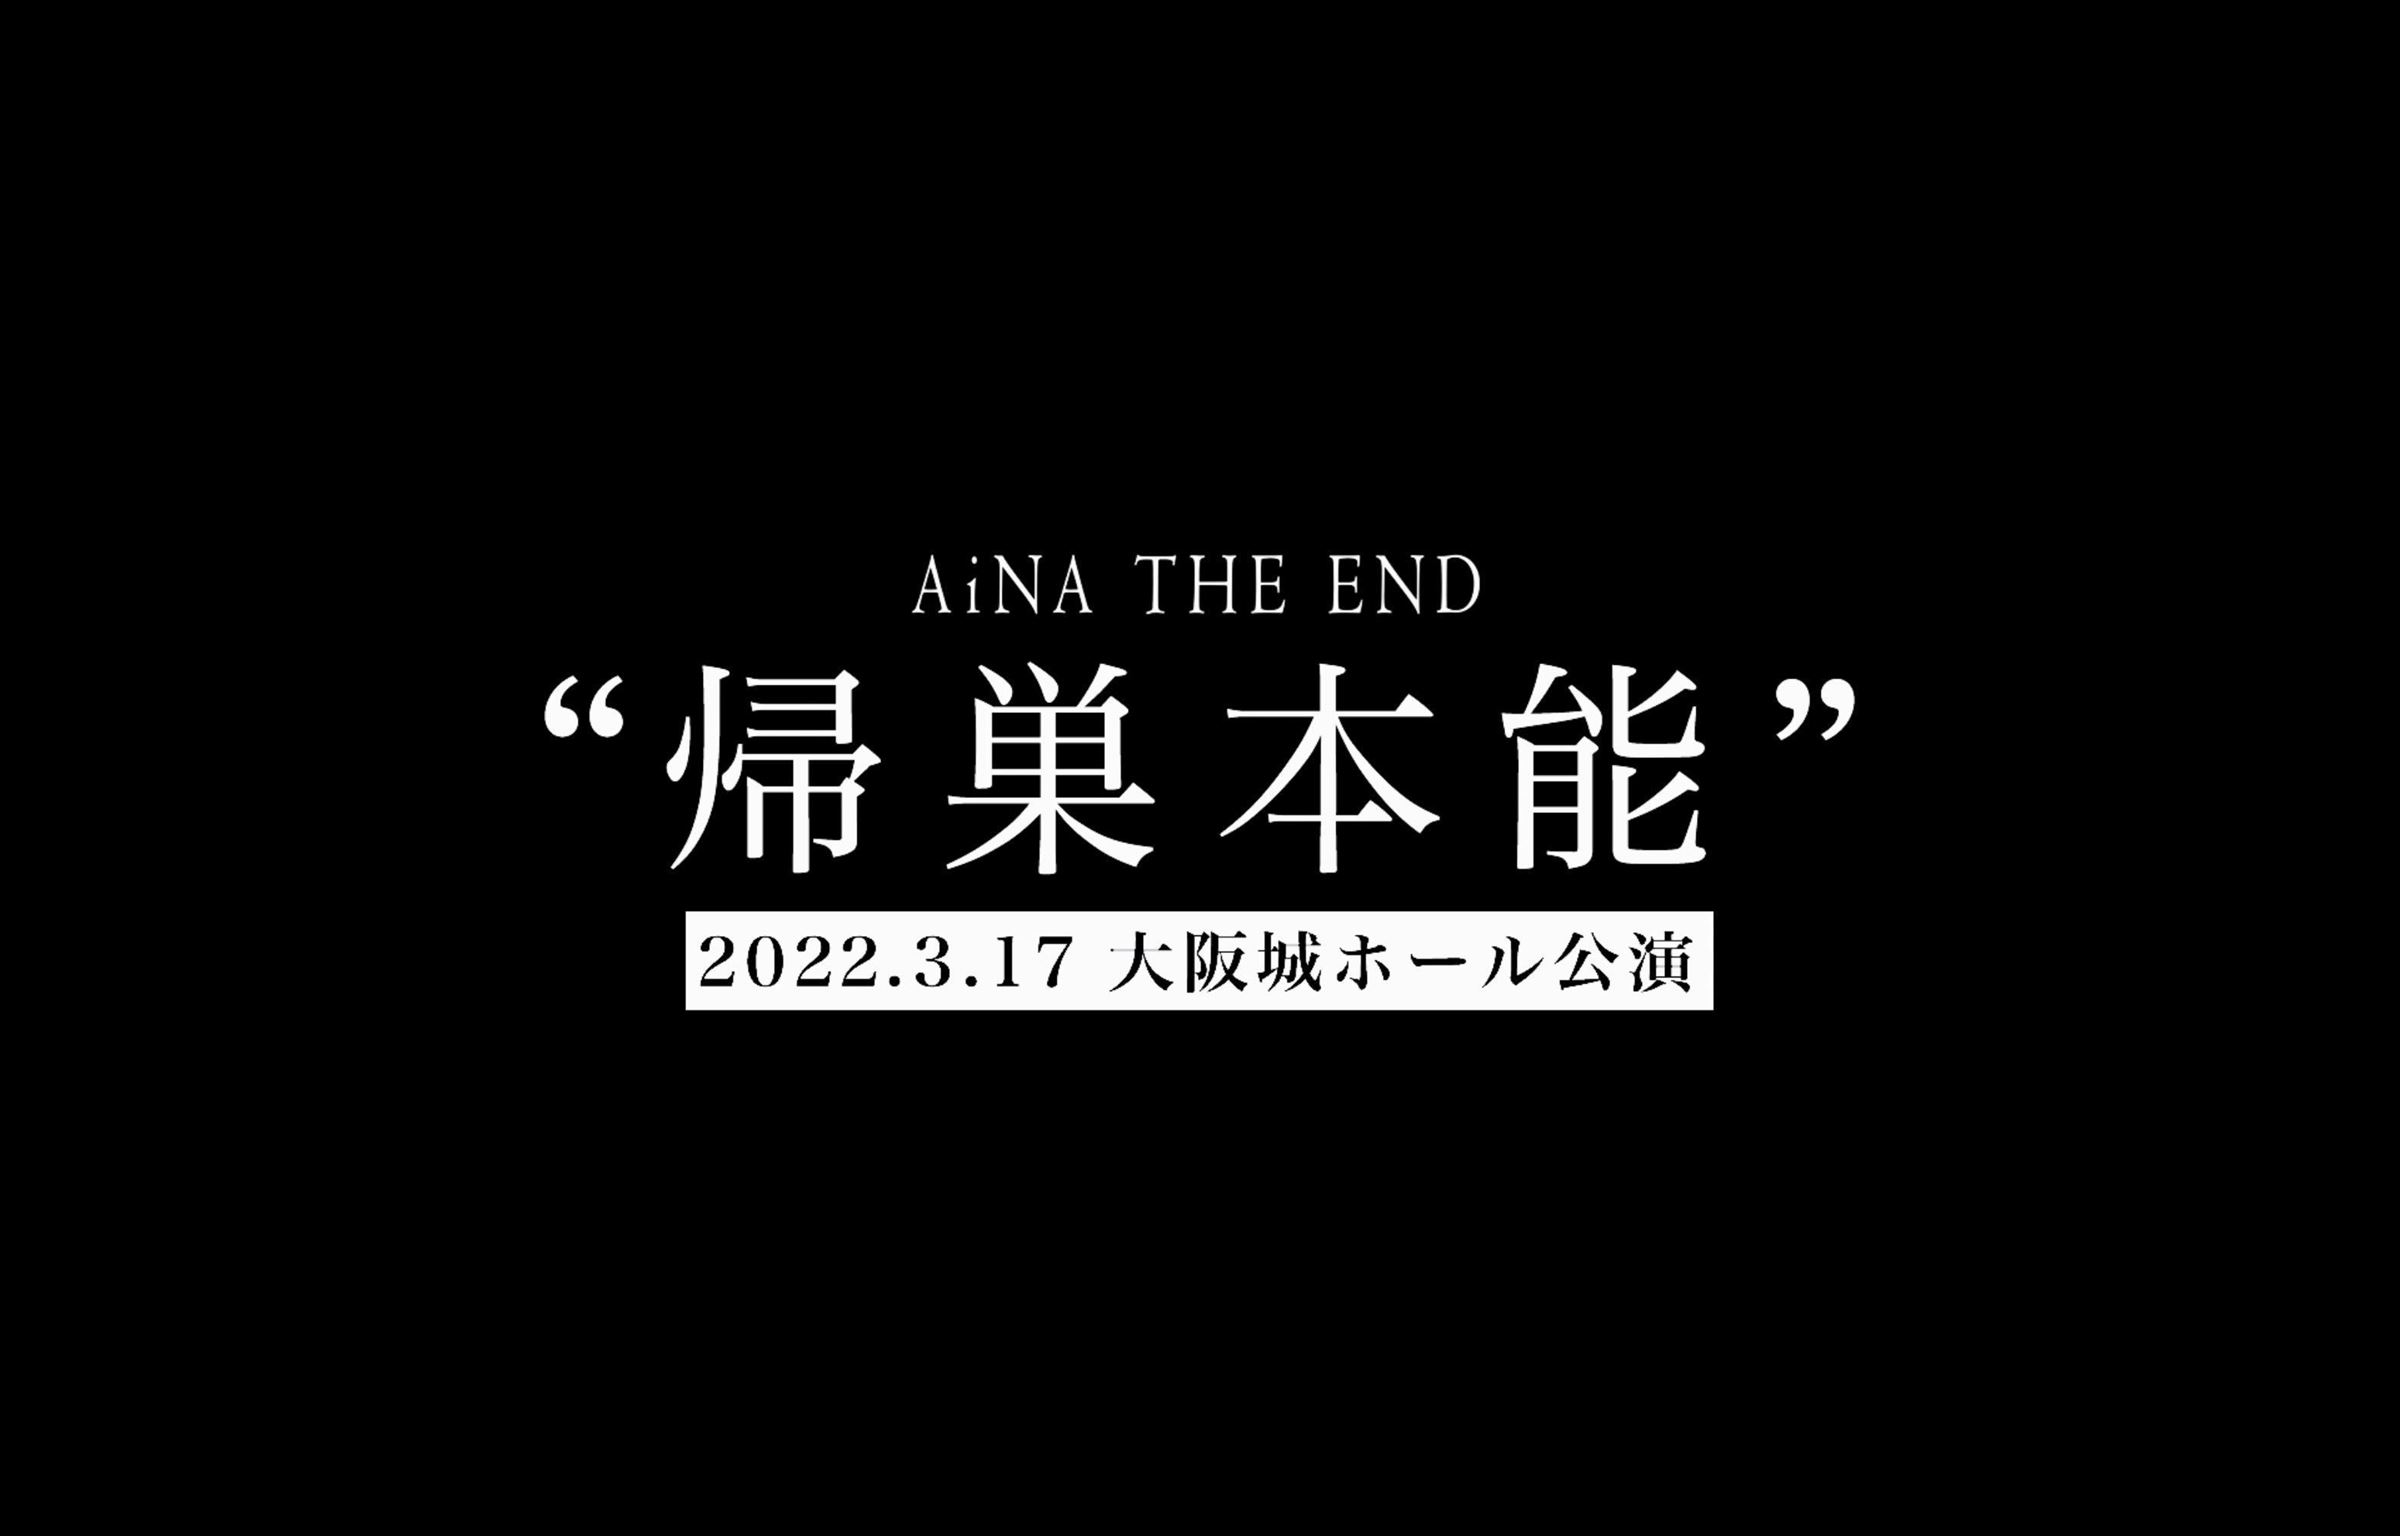 AiNA THE END "帰巣本能"(初回生産限定盤)